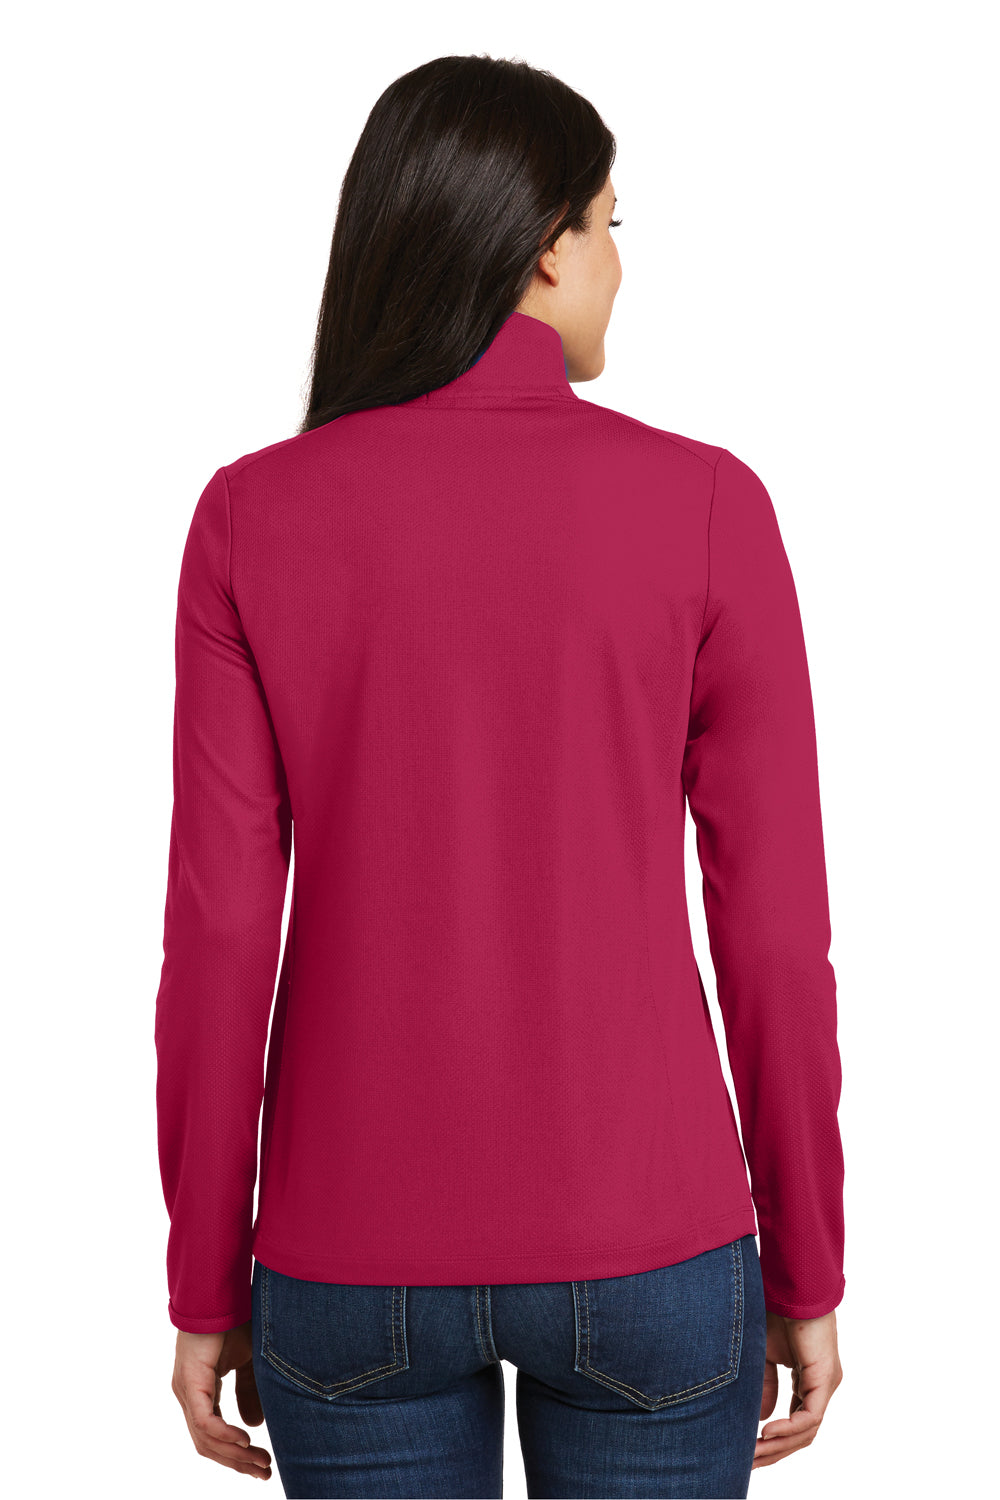 Port Authority L806 Womens Moisture Wicking 1/4 Zip Sweatshirt Fuchsia Pink Back